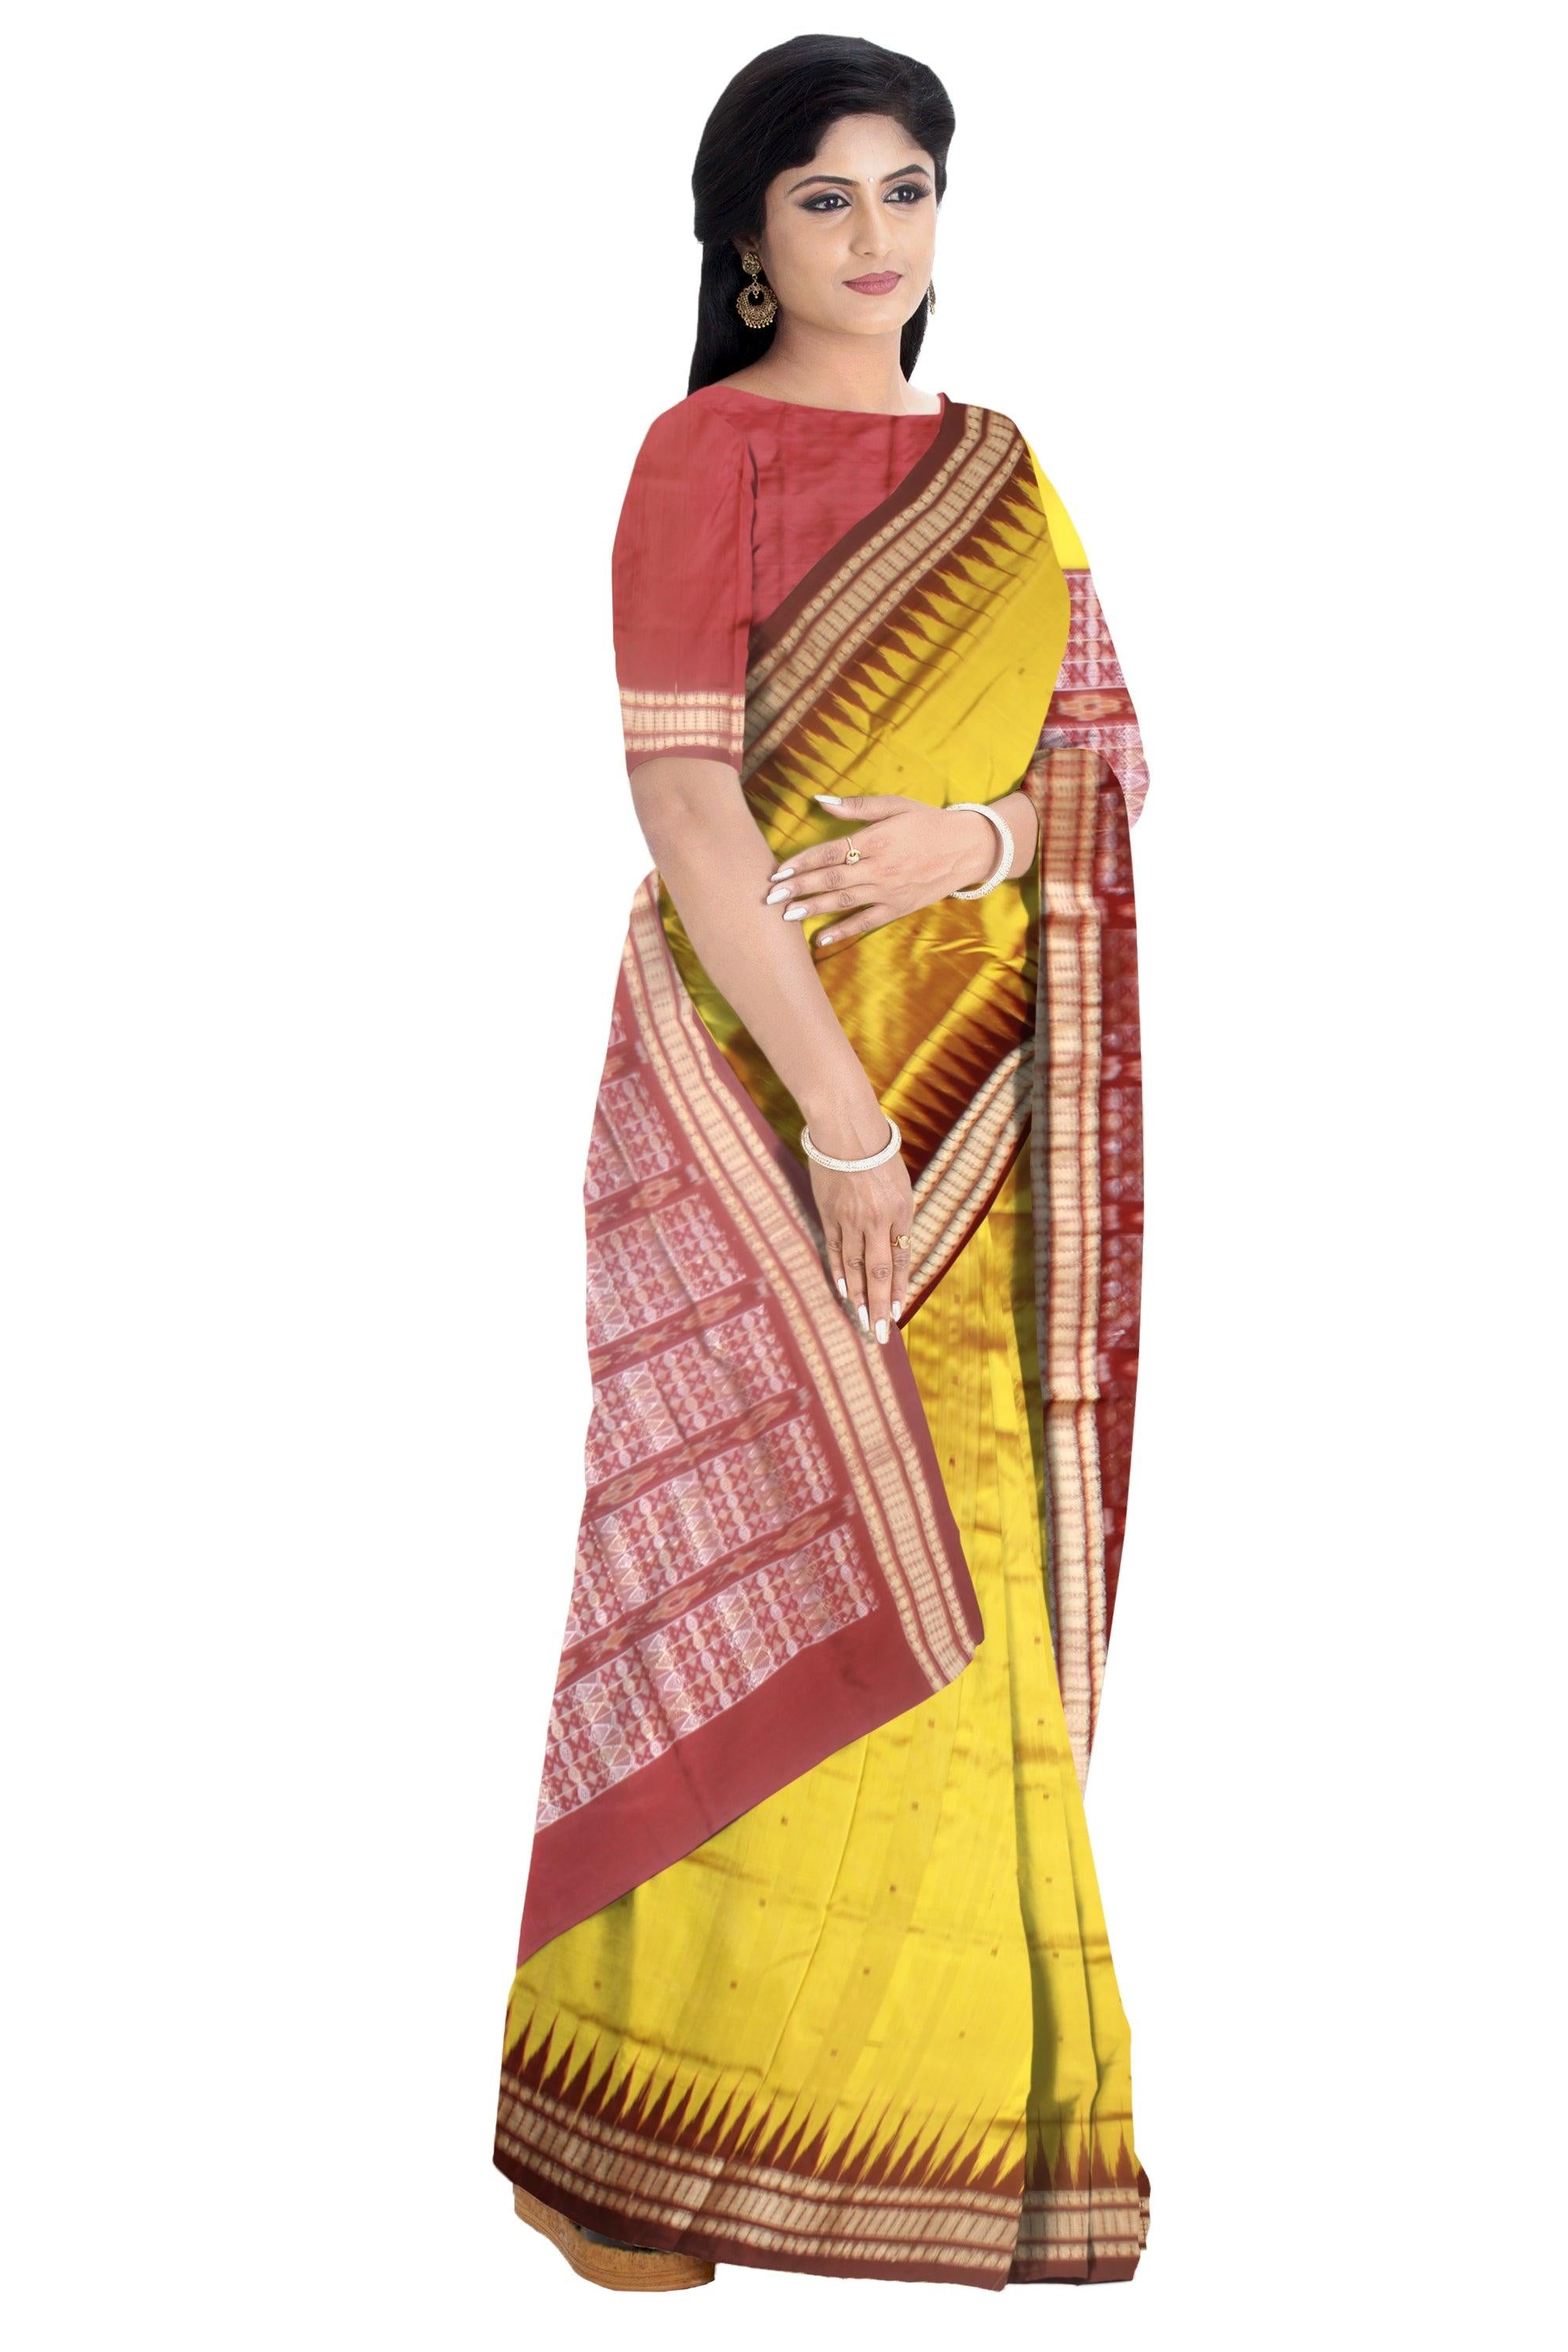 Sambalpuri Pata Saree in yellow color plain bomkei Design with blouse piece. - Koshali Arts & Crafts Enterprise